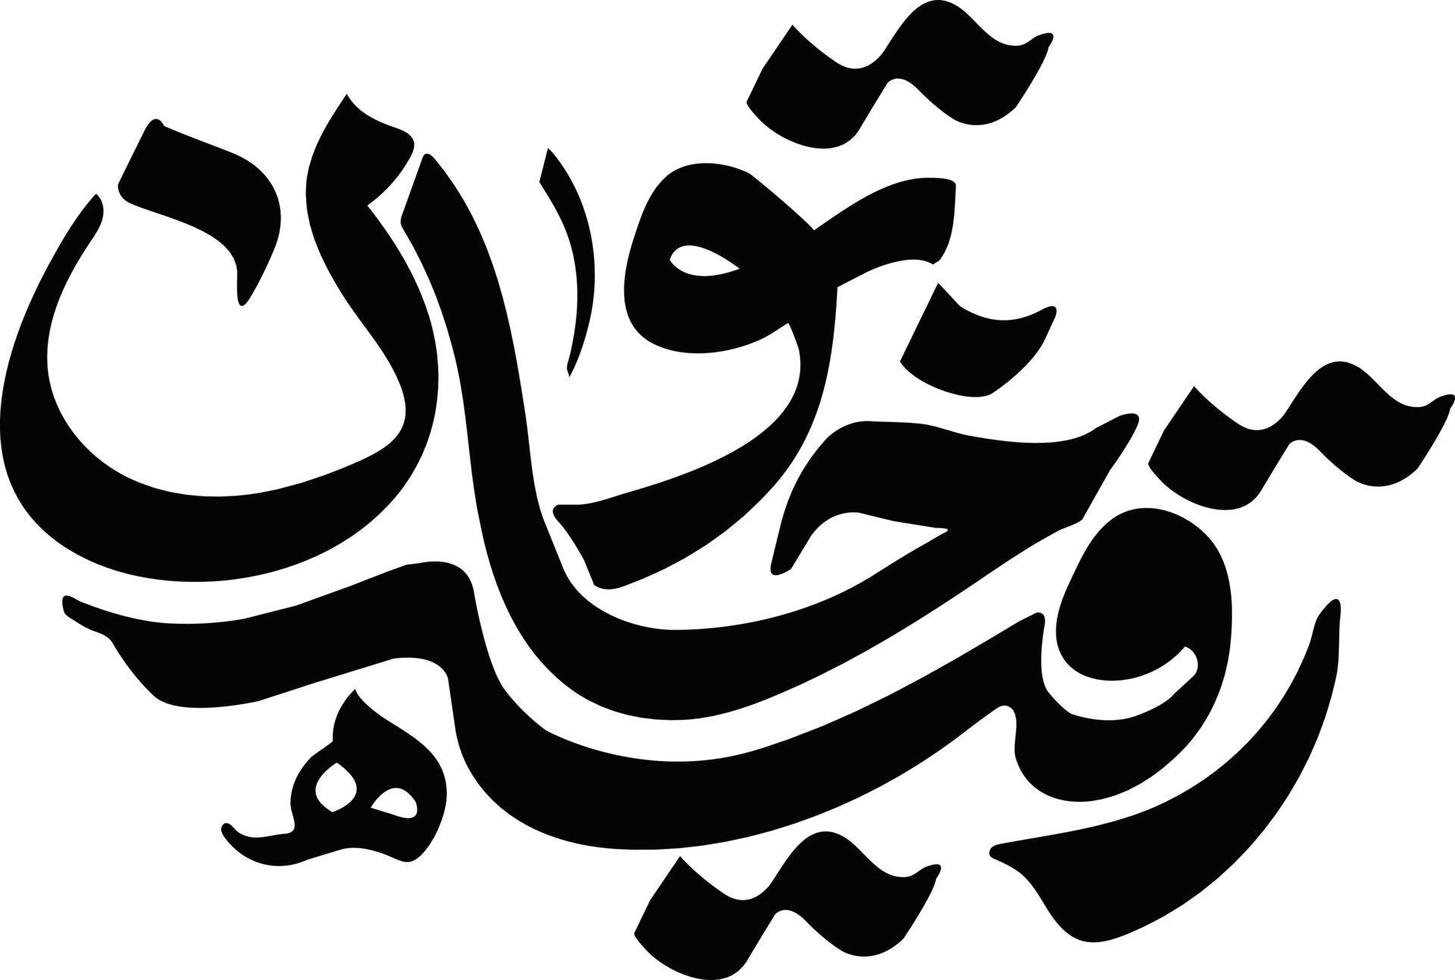 ruqaiya khatoon islámica urdu caligrafía vector libre